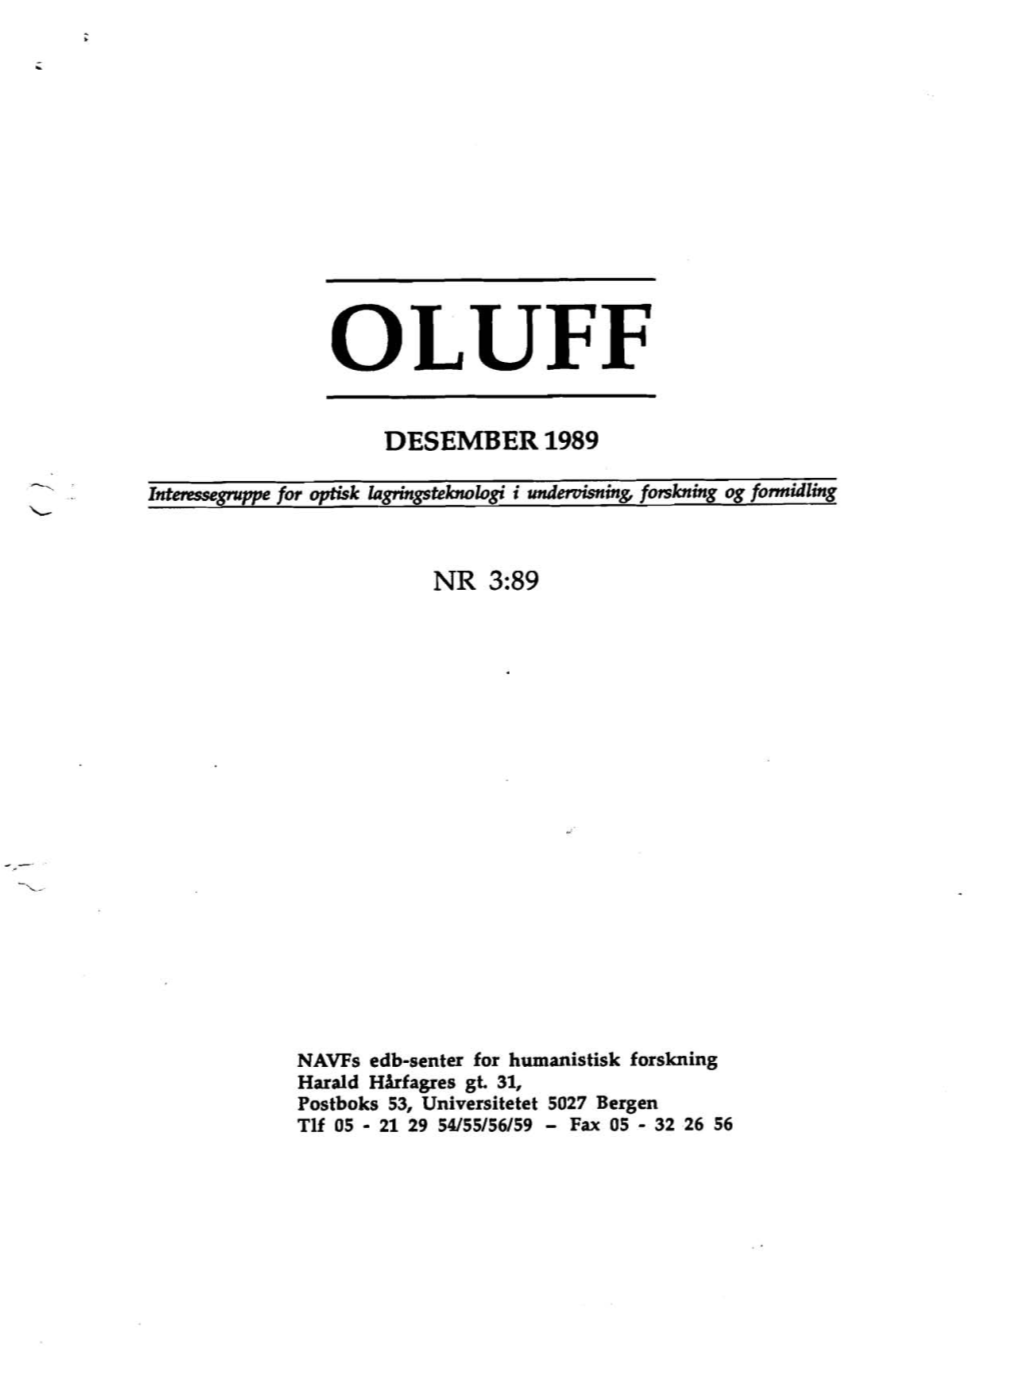 Oluff Desember 1989